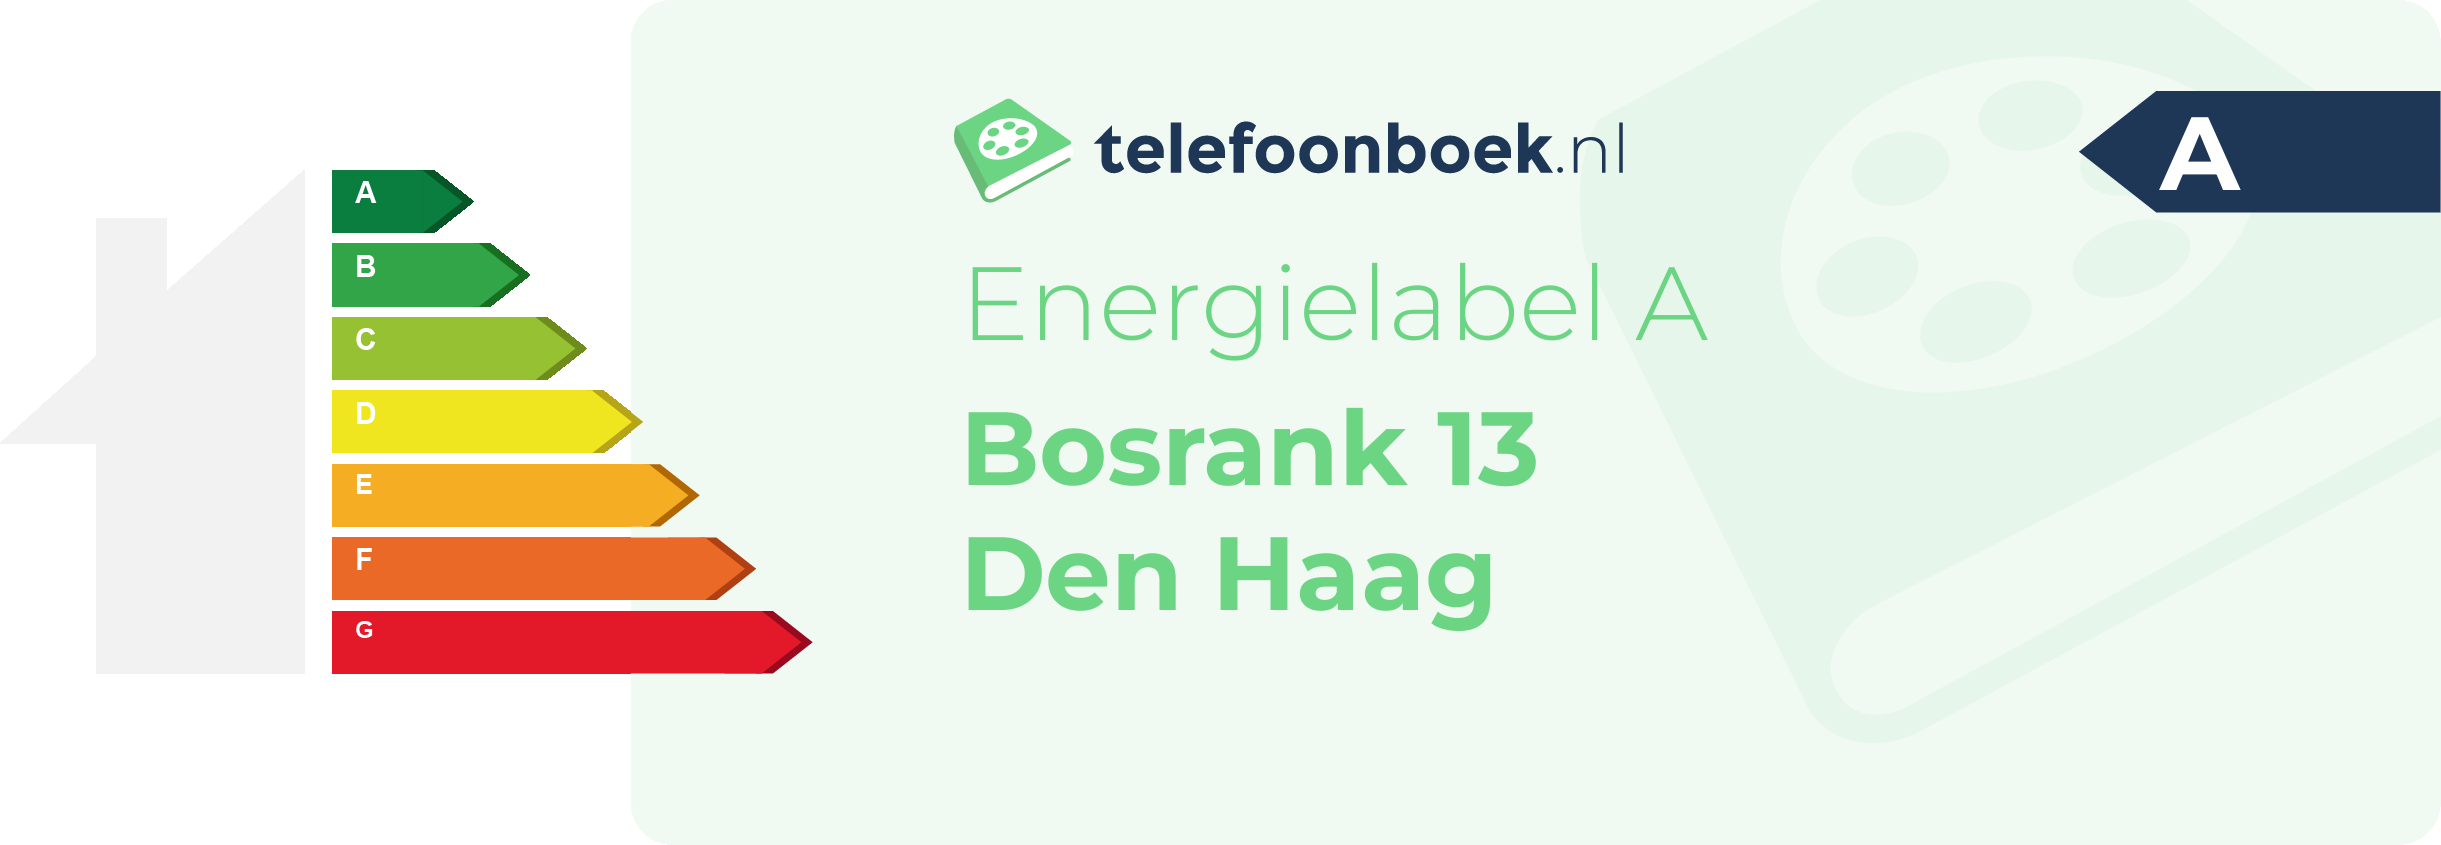 Energielabel Bosrank 13 Den Haag